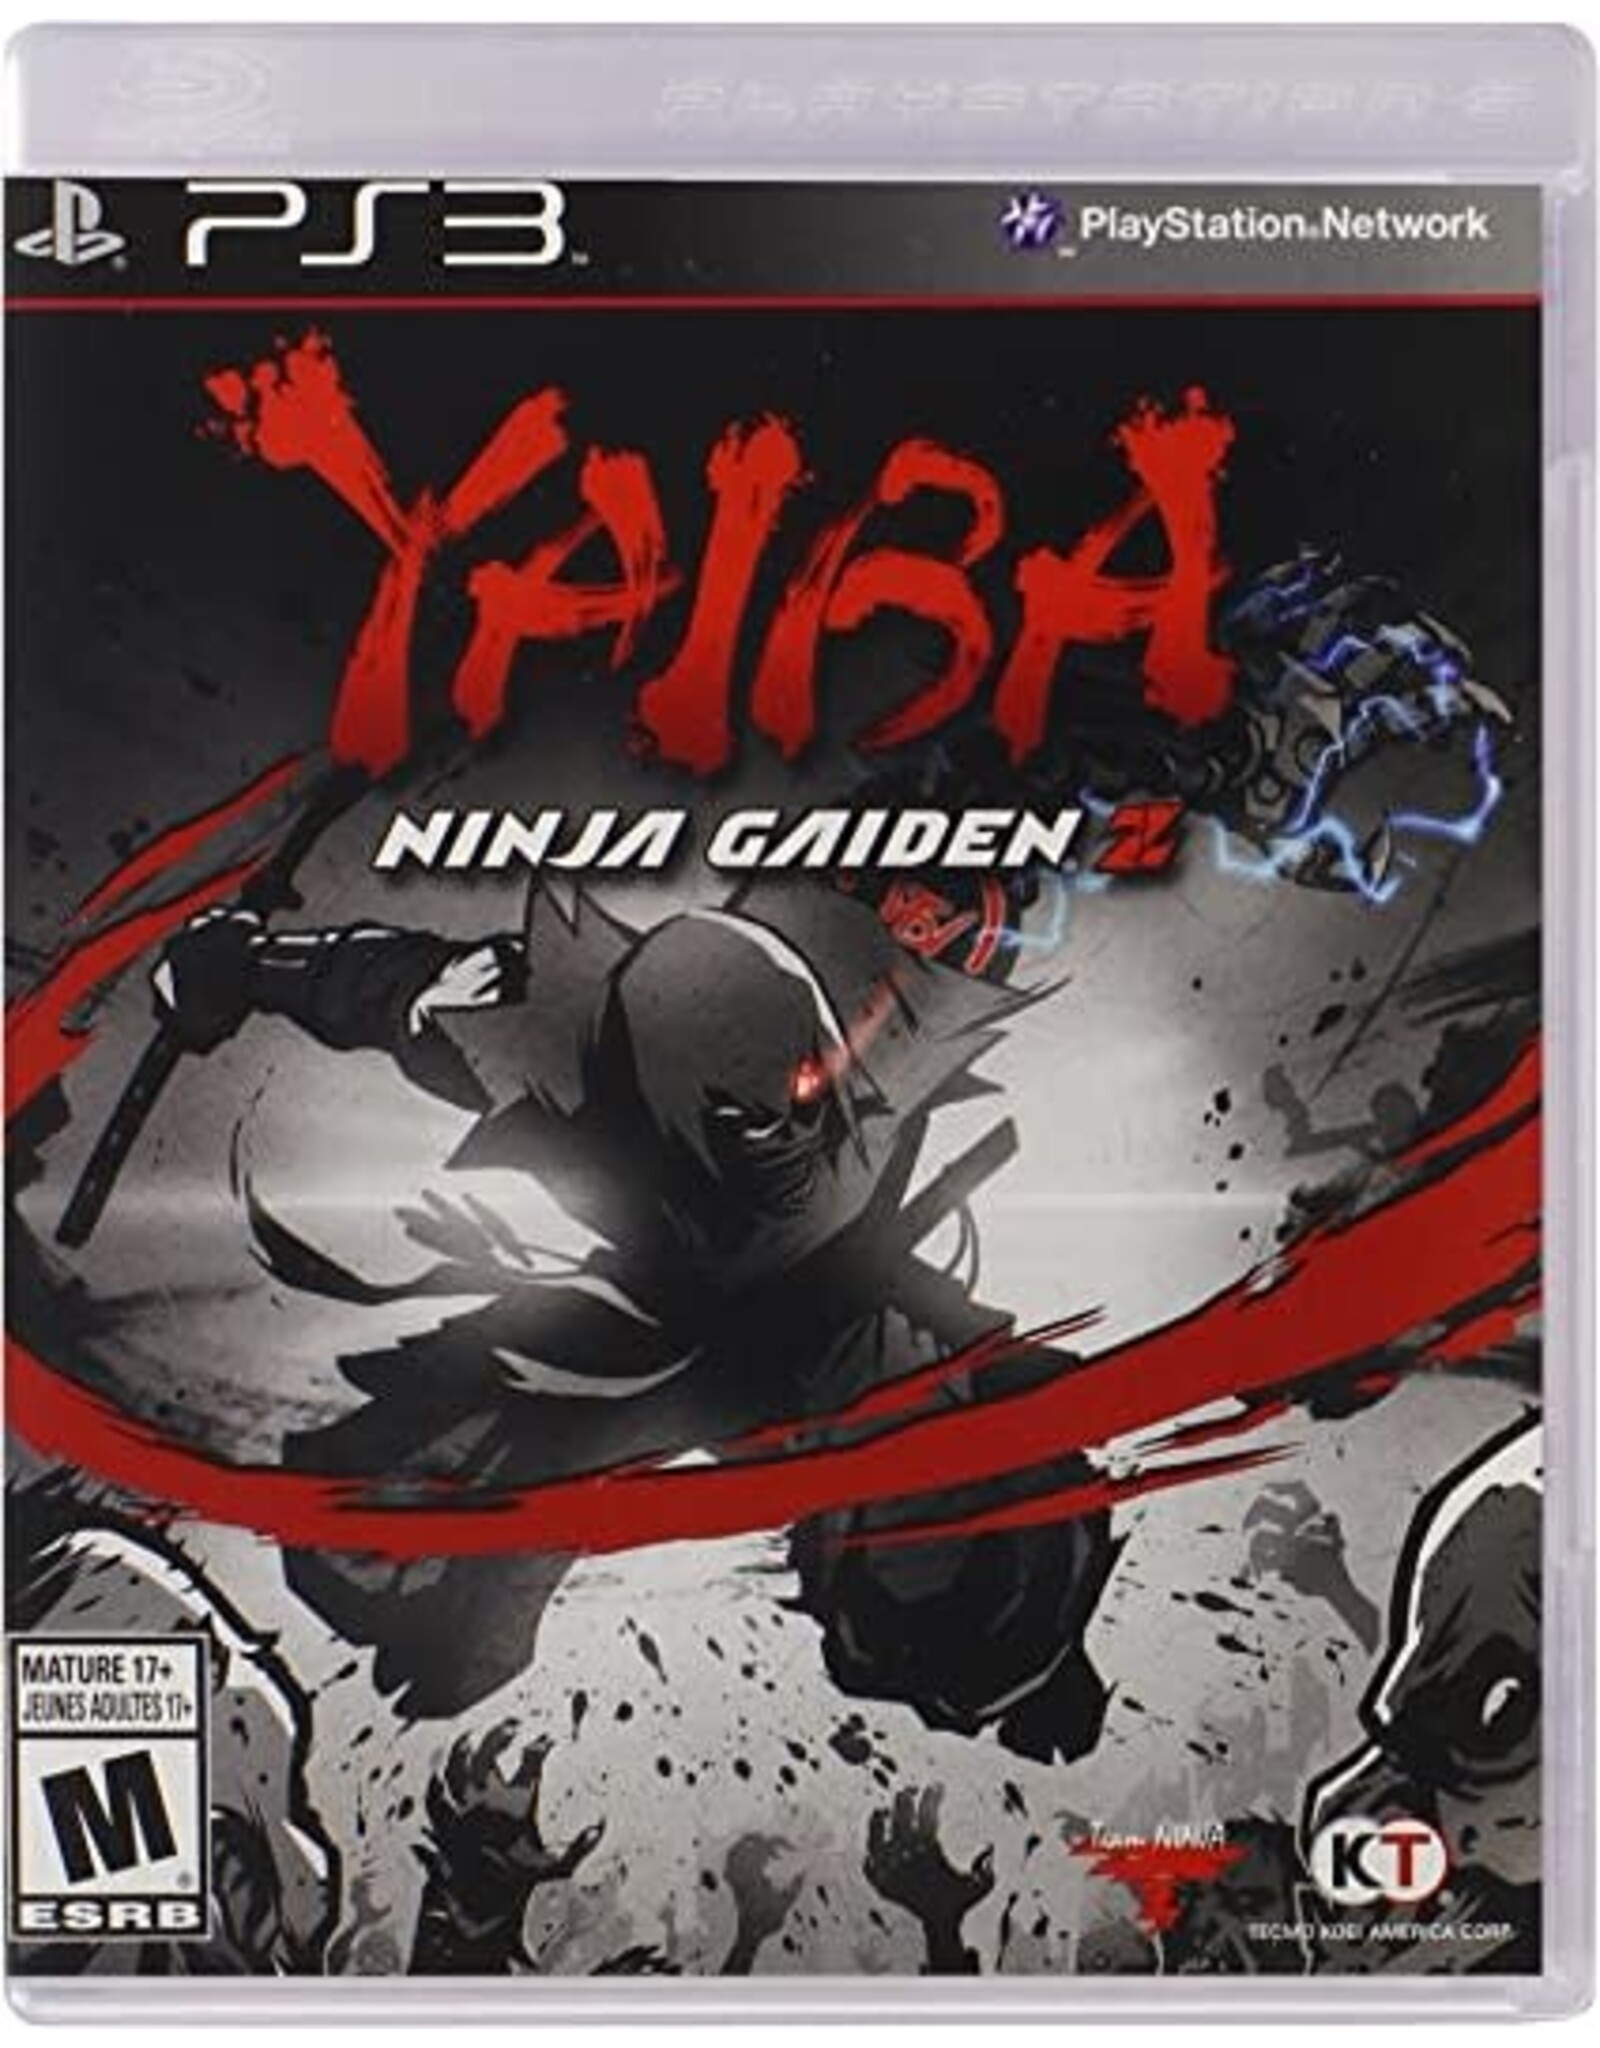 Playstation 3 Yaiba: Ninja Gaiden Z (CiB)